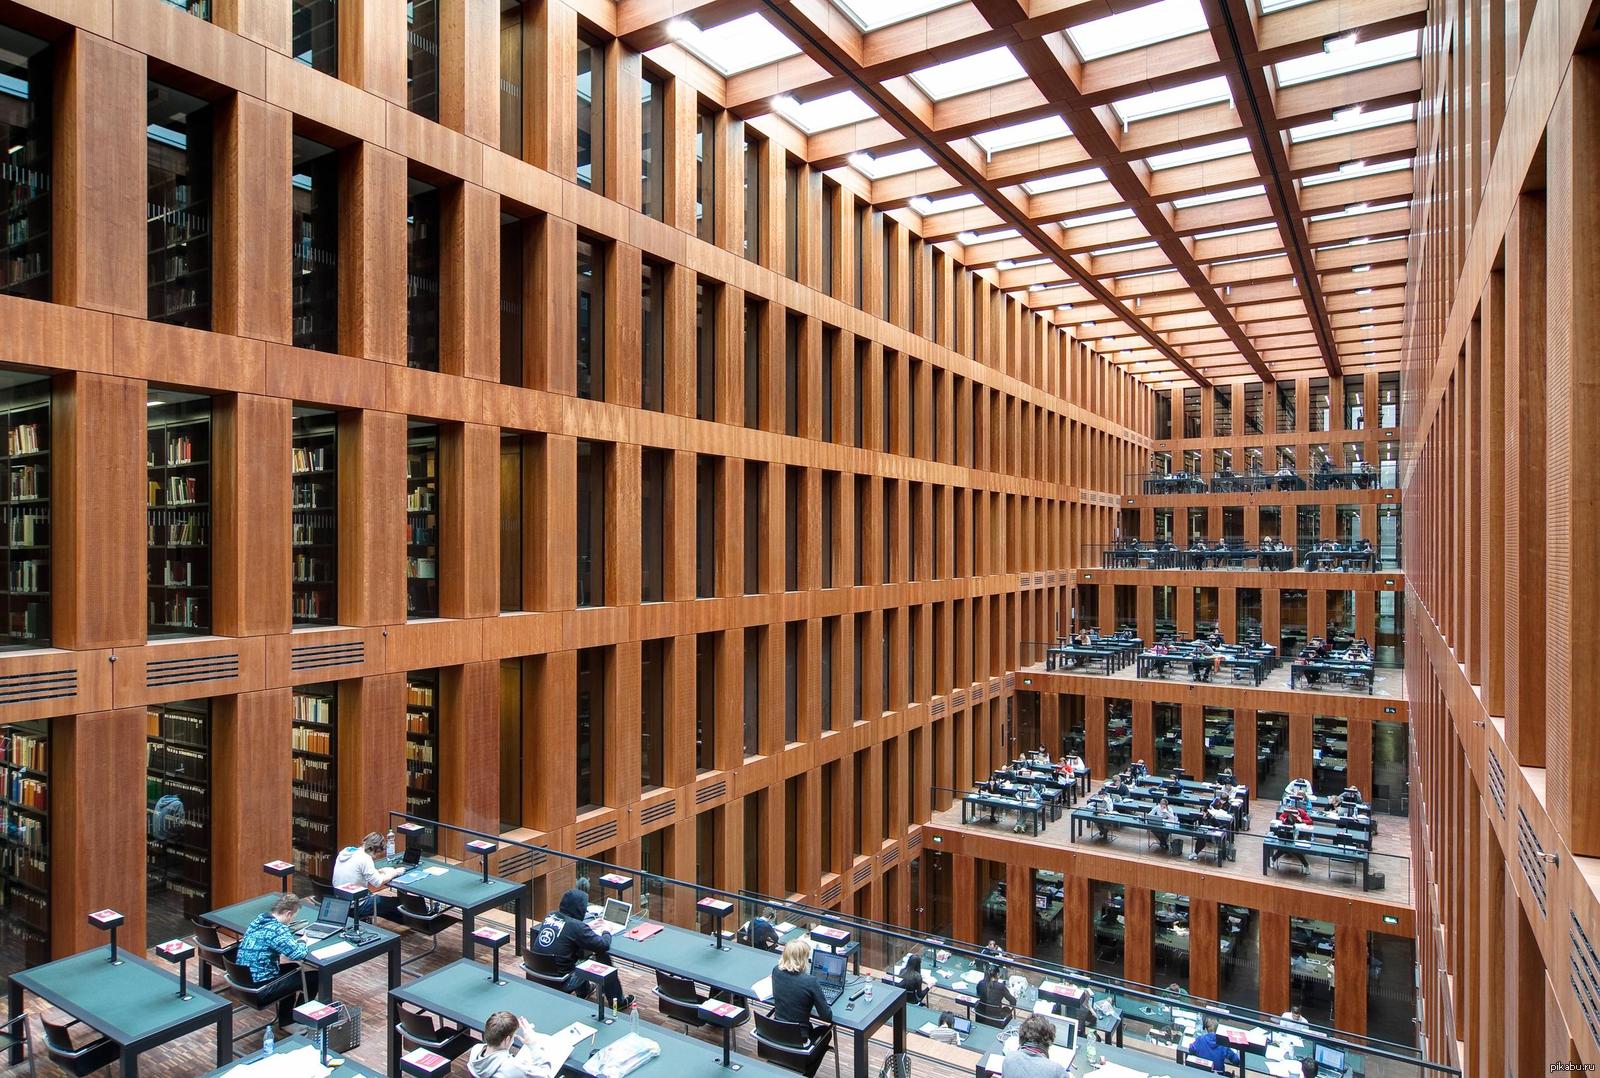 Attachment library. Библиотека университета Гумбольдта. Берлинский университет Гумбольдта. Институт Гумбольта в Берлине. Библиотека Гумбольдта в Берлине.